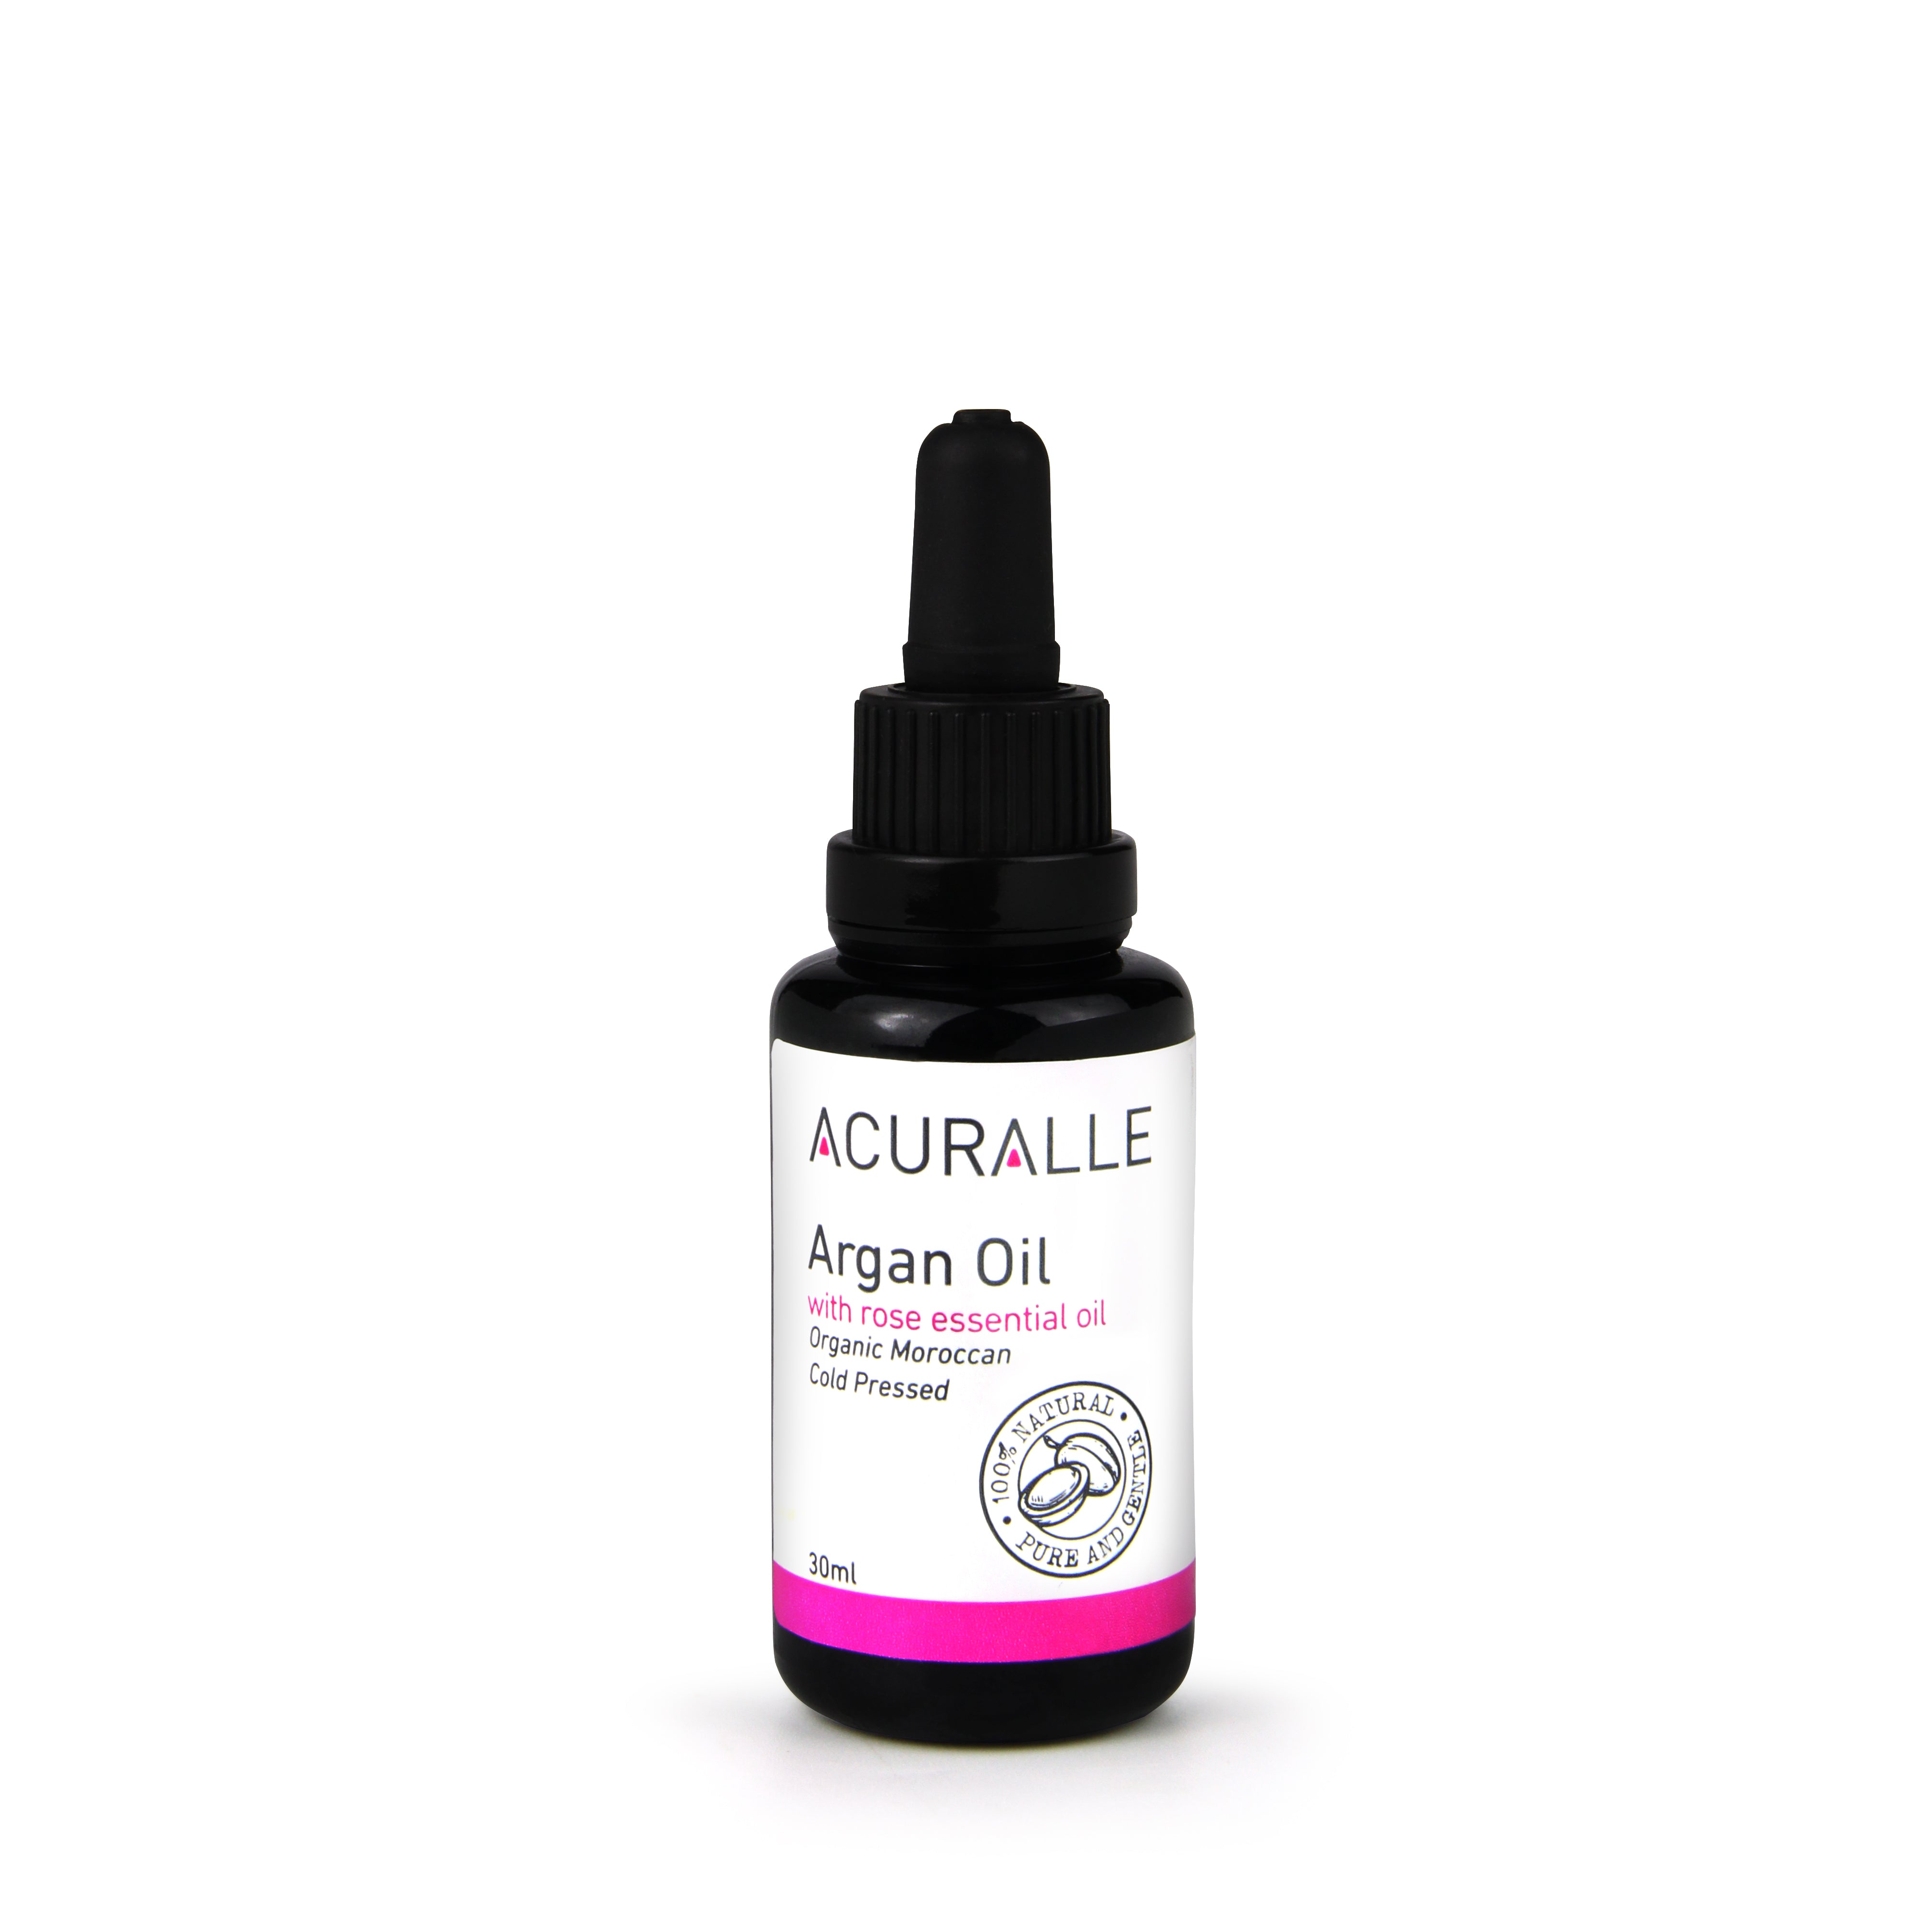 Acuralle Argan Oil with Rose Essential Oil 30ml